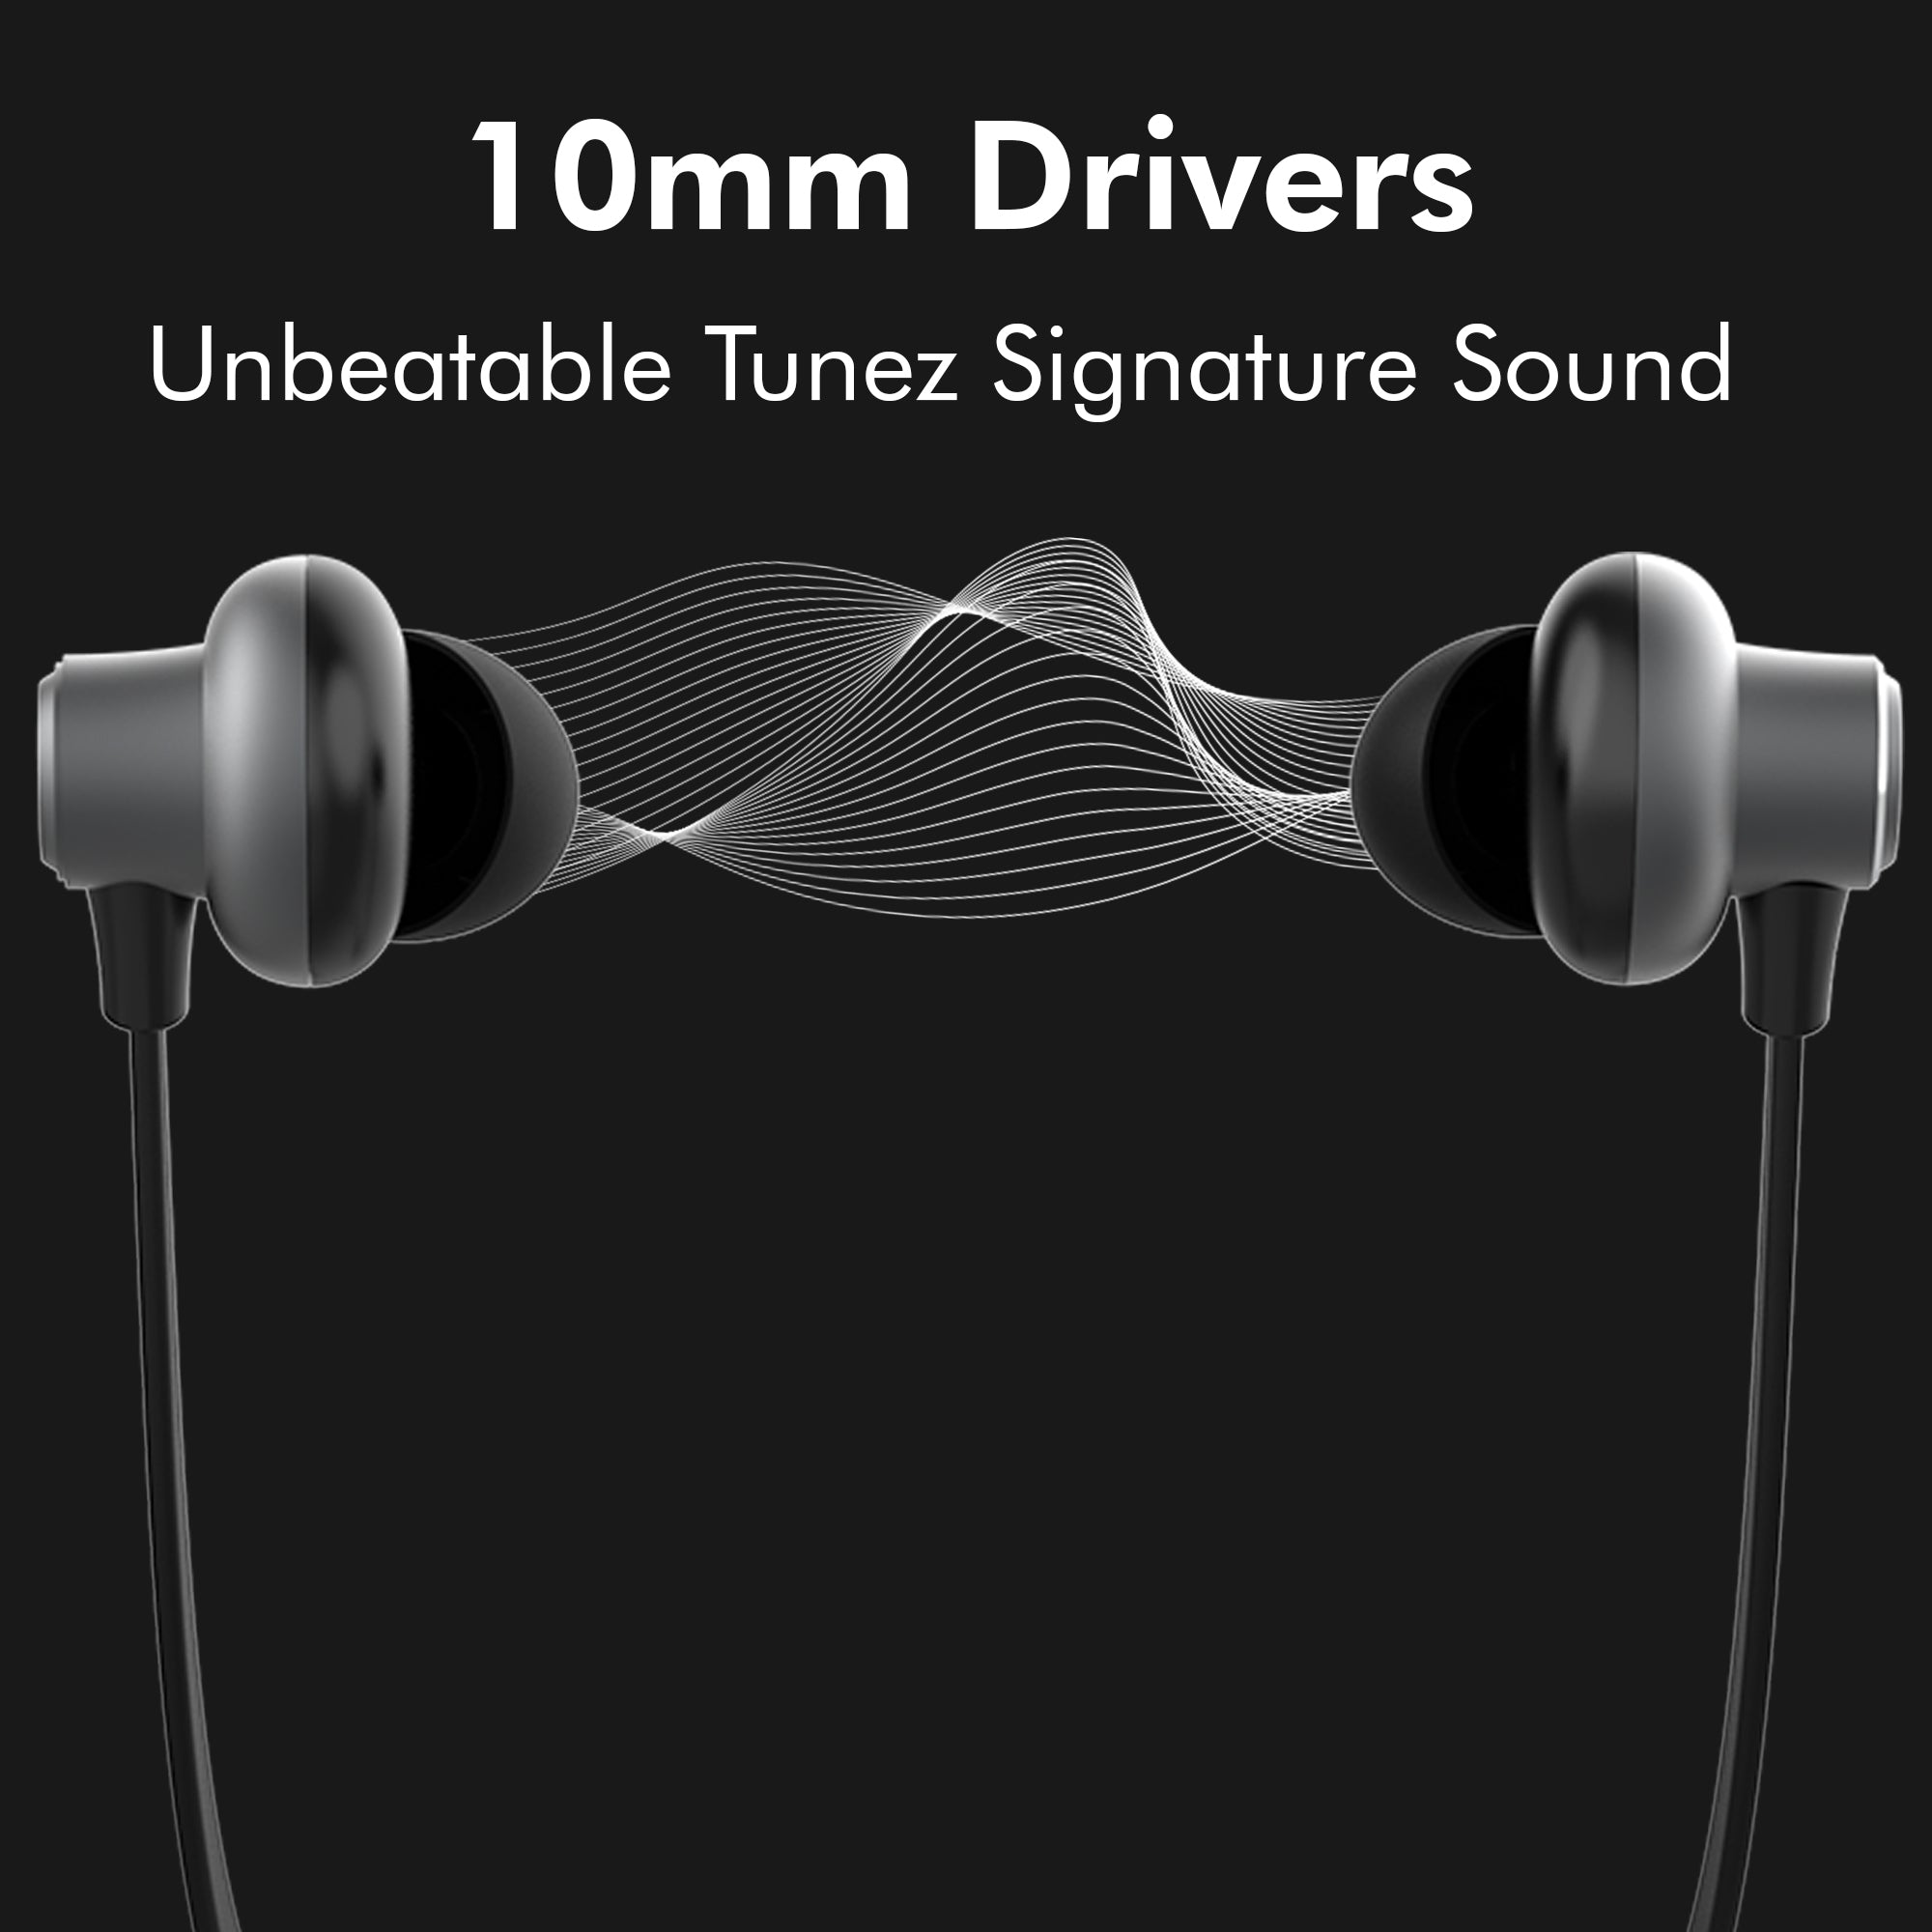 Tunez Rhythm R 30 Wireless Bluetooth Earphone -Neck Band - tunez